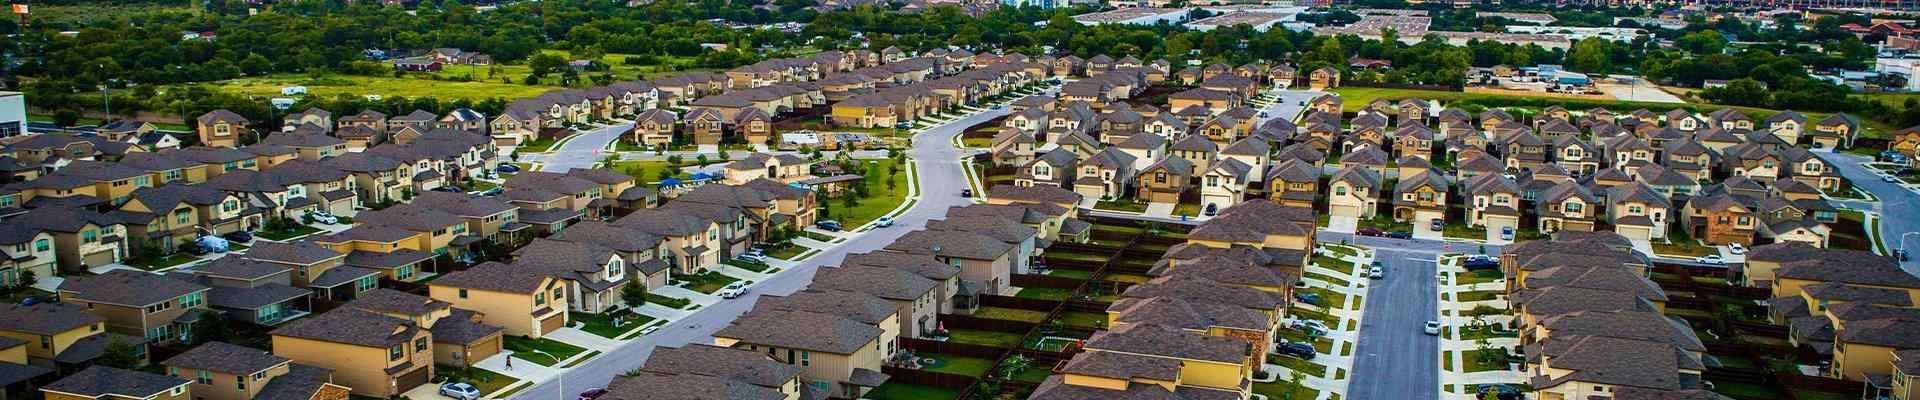 aerial view of a suburban neighborhood in corinth texas